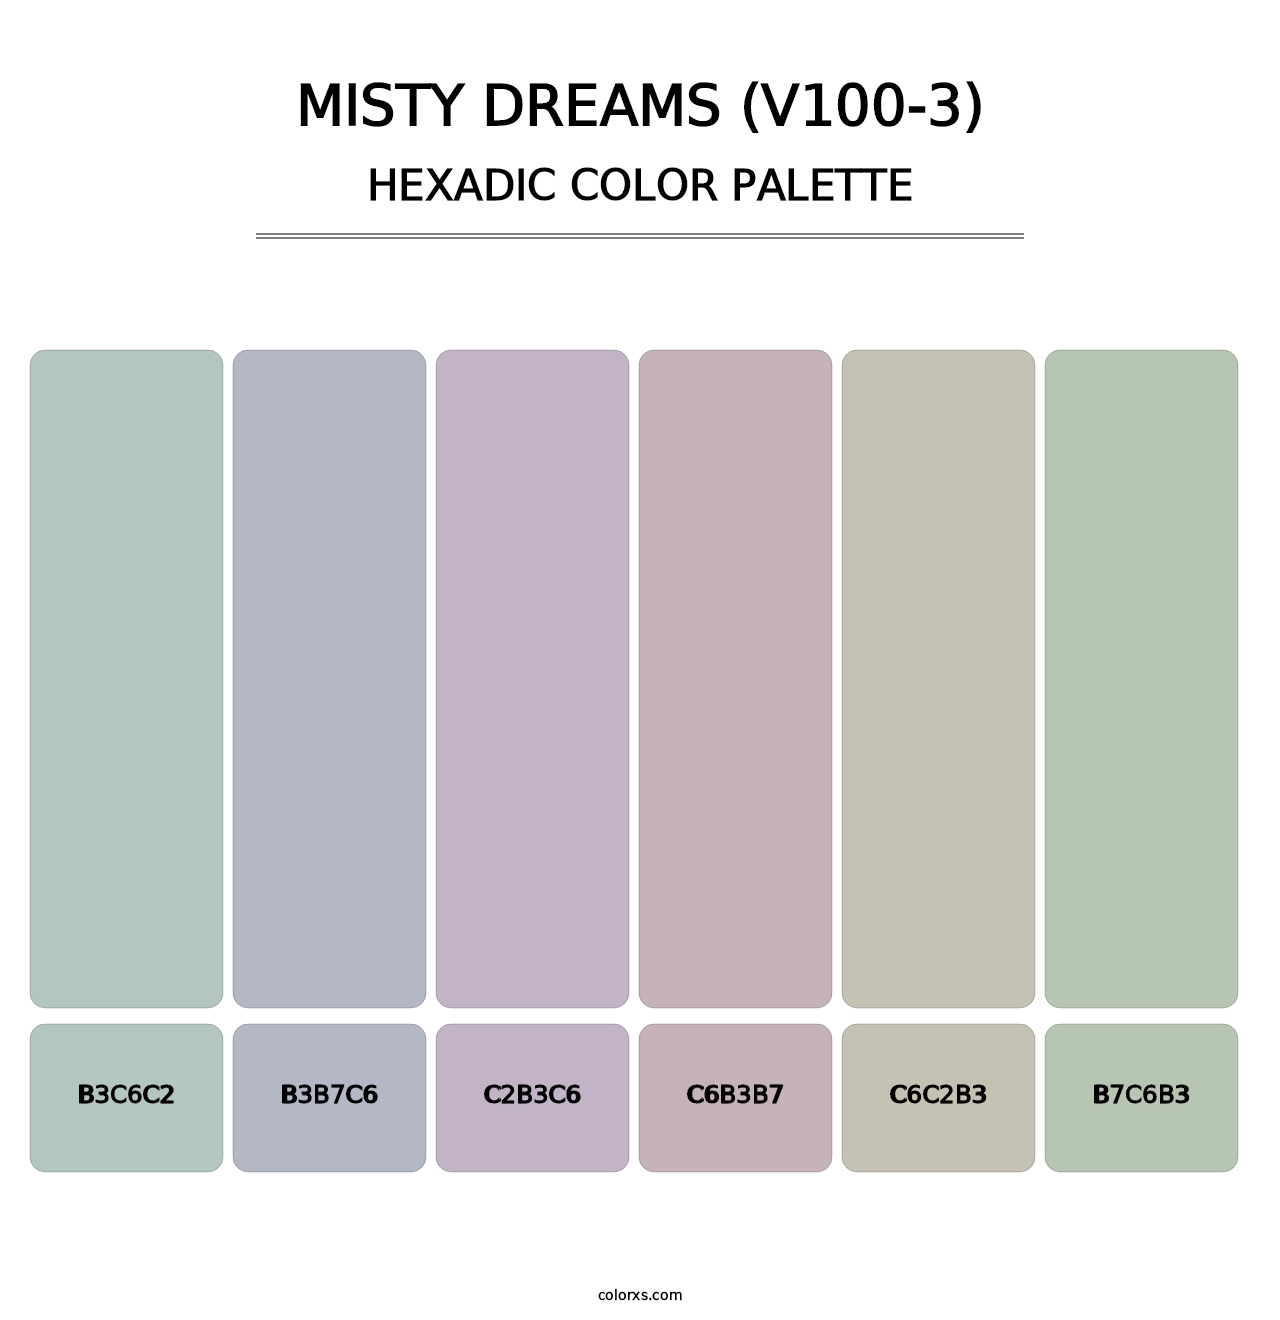 Misty Dreams (V100-3) - Hexadic Color Palette